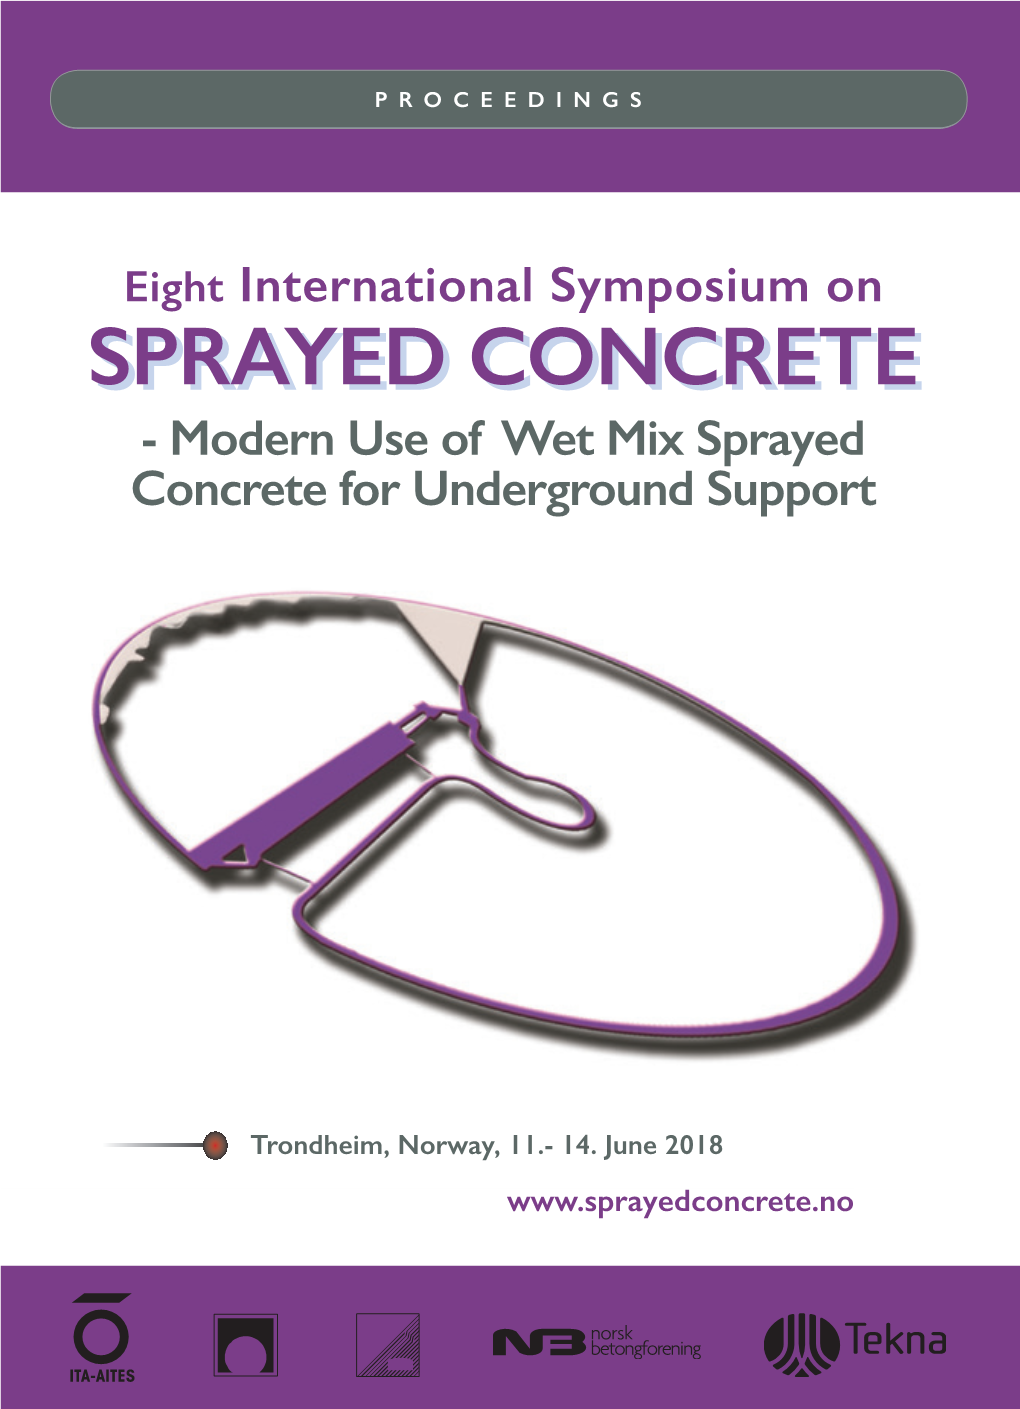 SPRAYED CONCRETECONCRETE - Modern Use of Wet Mix Sprayed Concrete for Underground Support